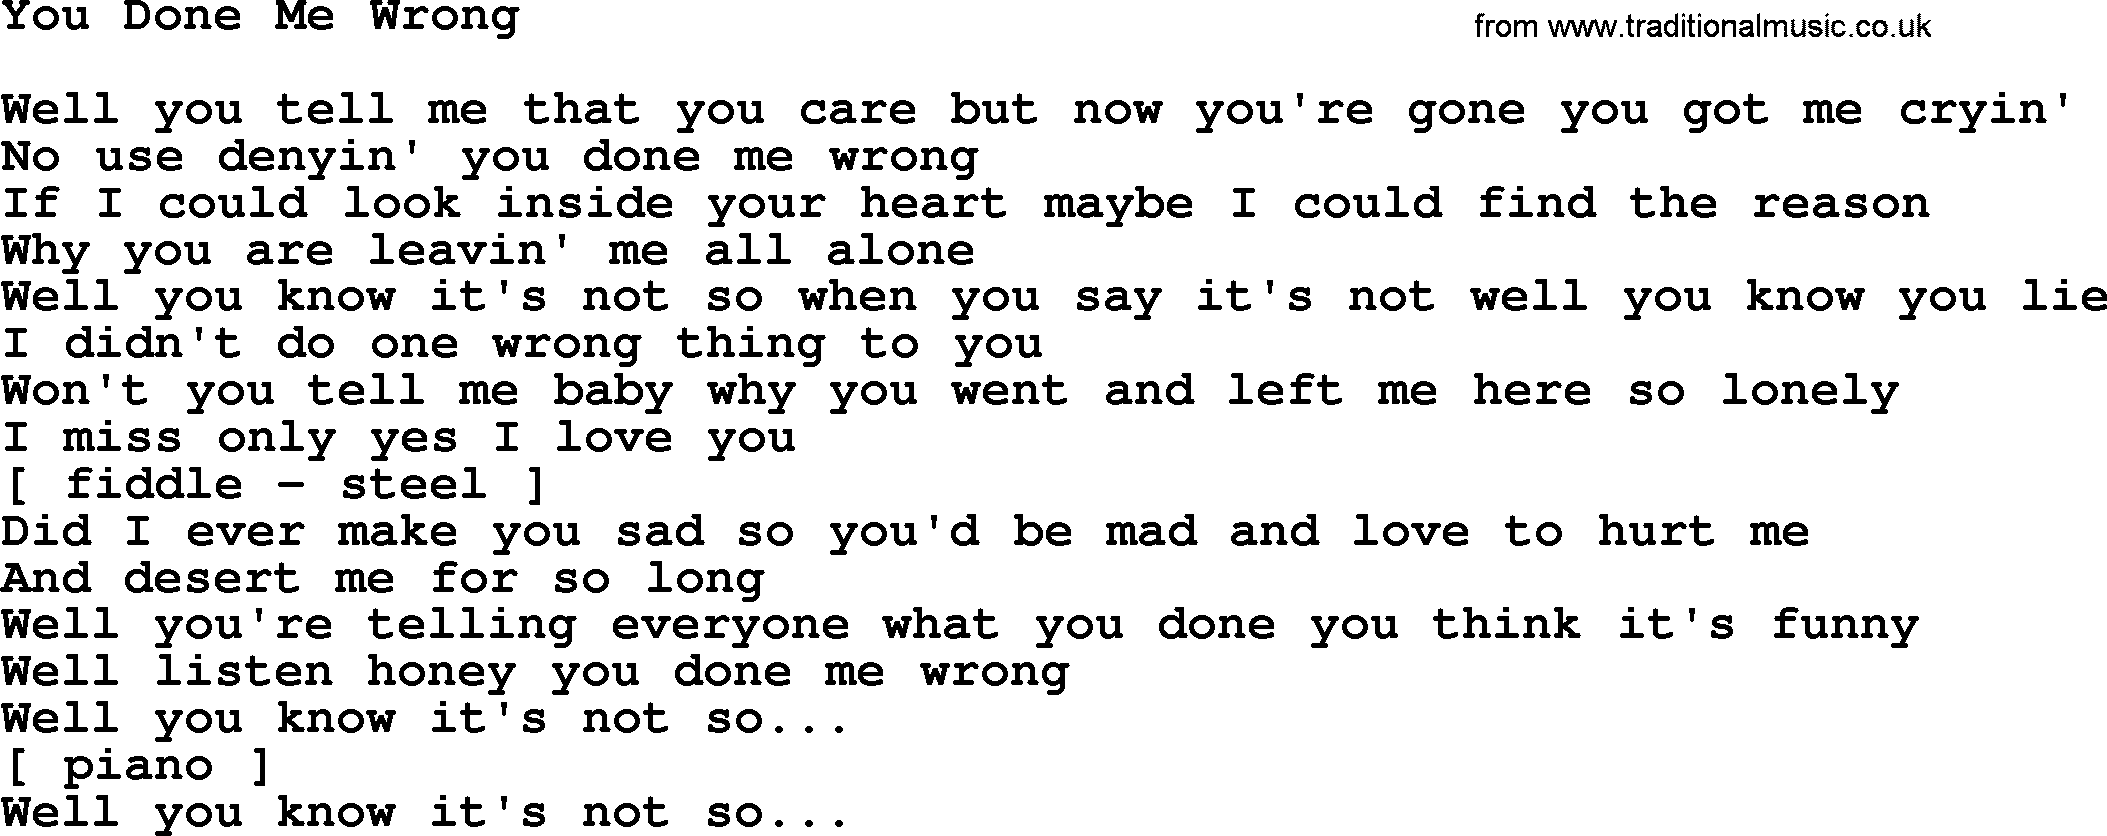 George Jones song: You Done Me Wrong, lyrics